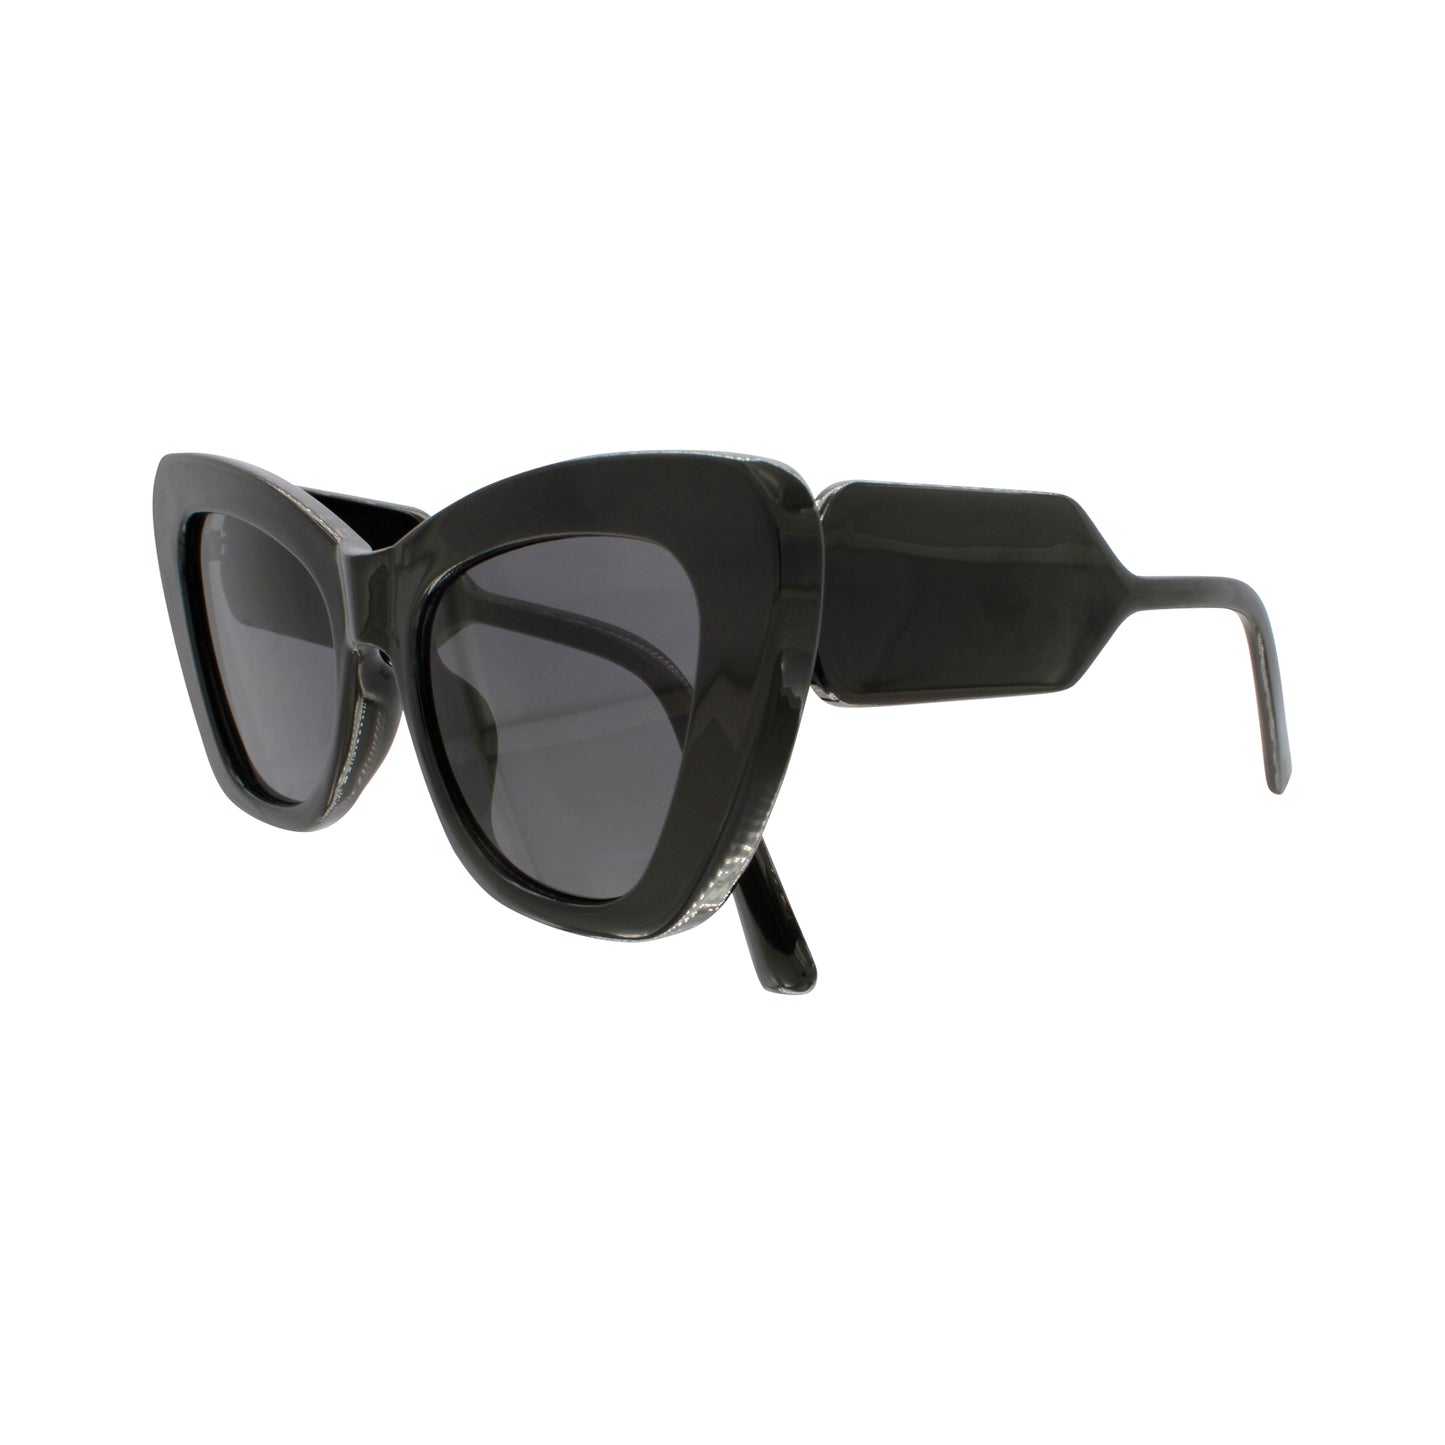 Saga Black Sunglasses UV400 Protection